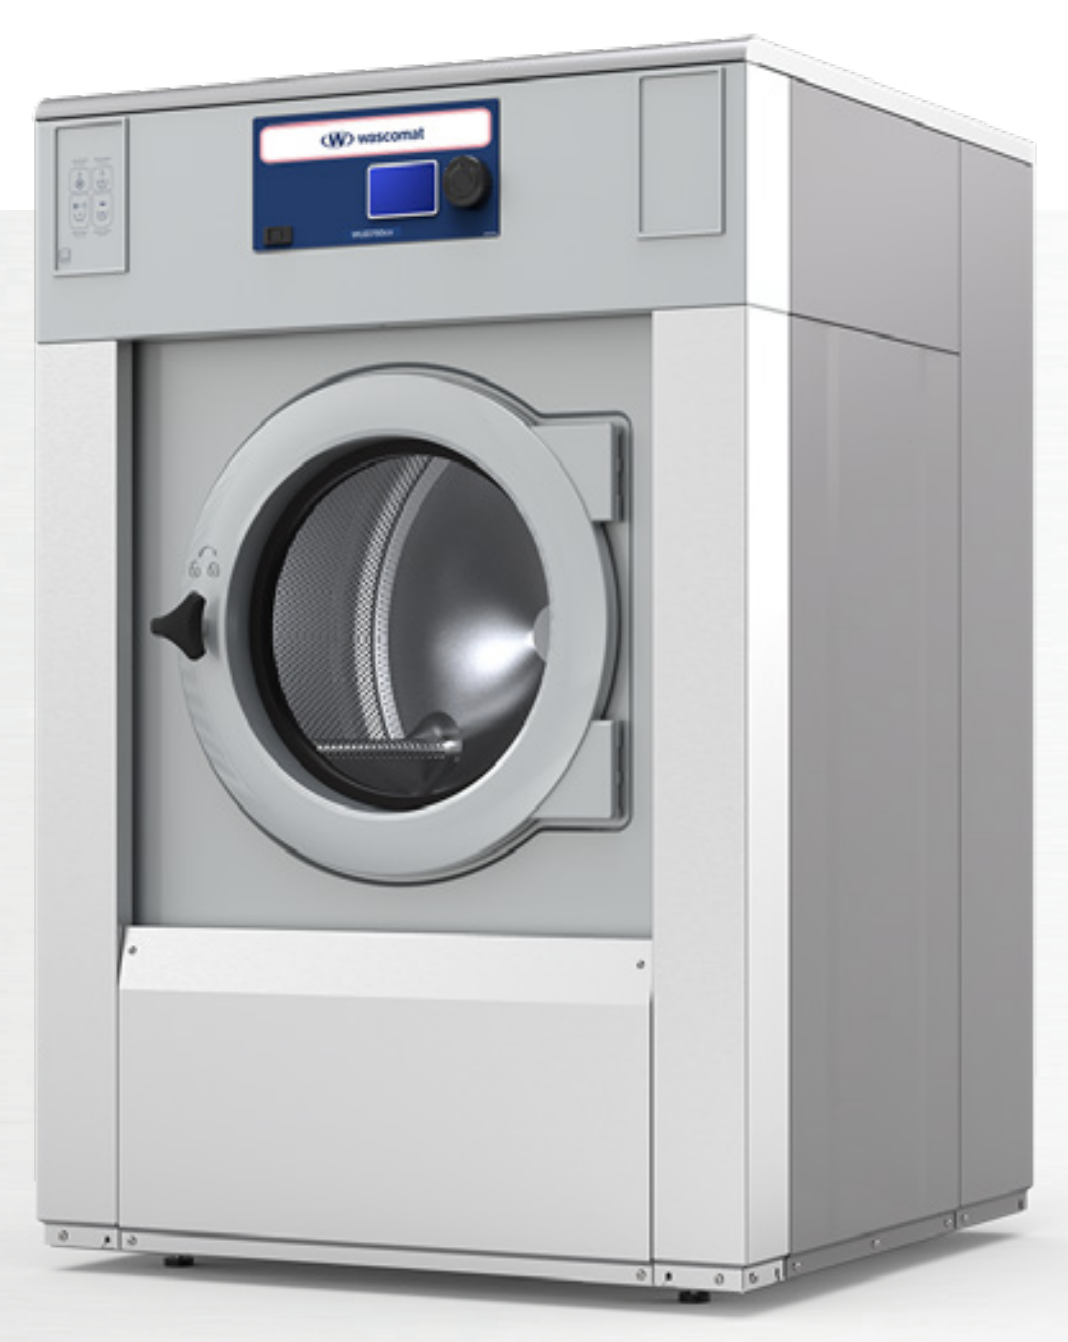 New 2022 Wascomat Wud718 Opl - Cardinal Laundry Equipment Co